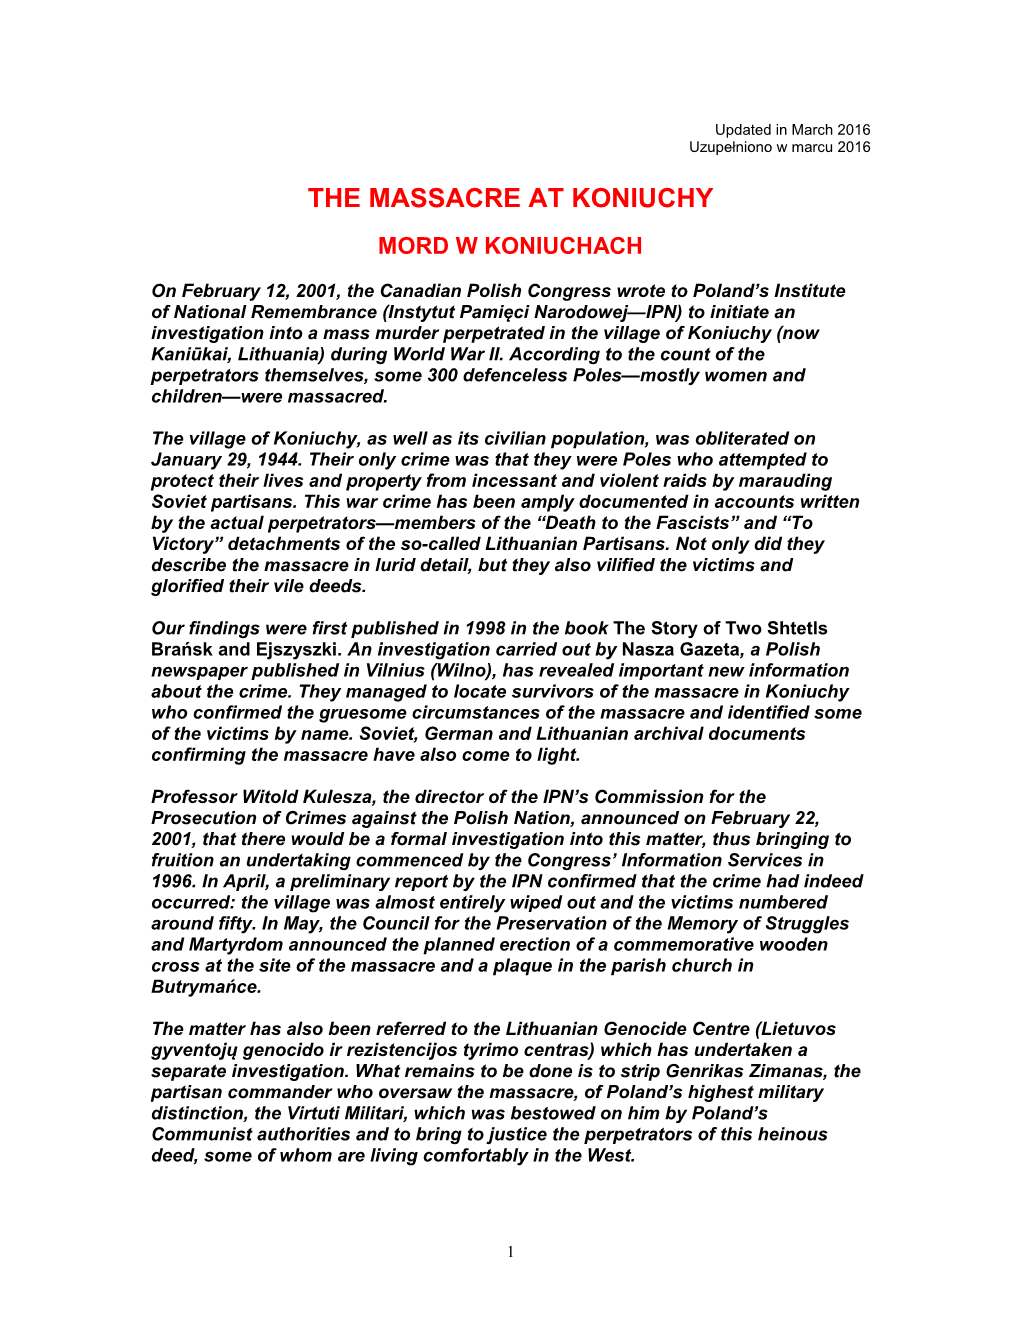 The Massacre at Koniuchy